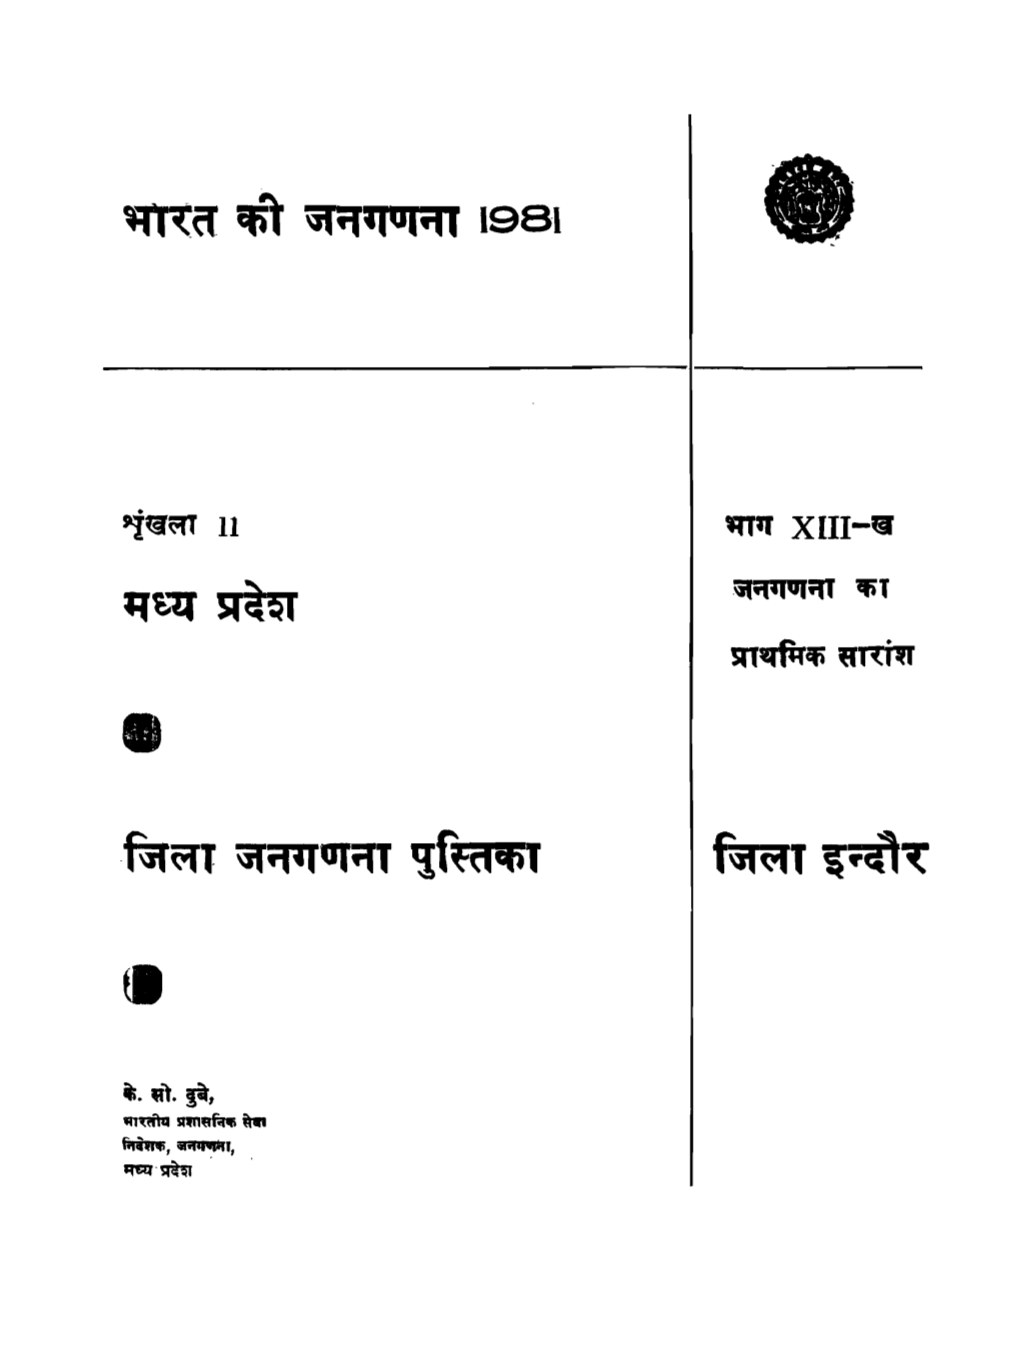 District Census Handbook, Indore, Part XIII-B, Series-11